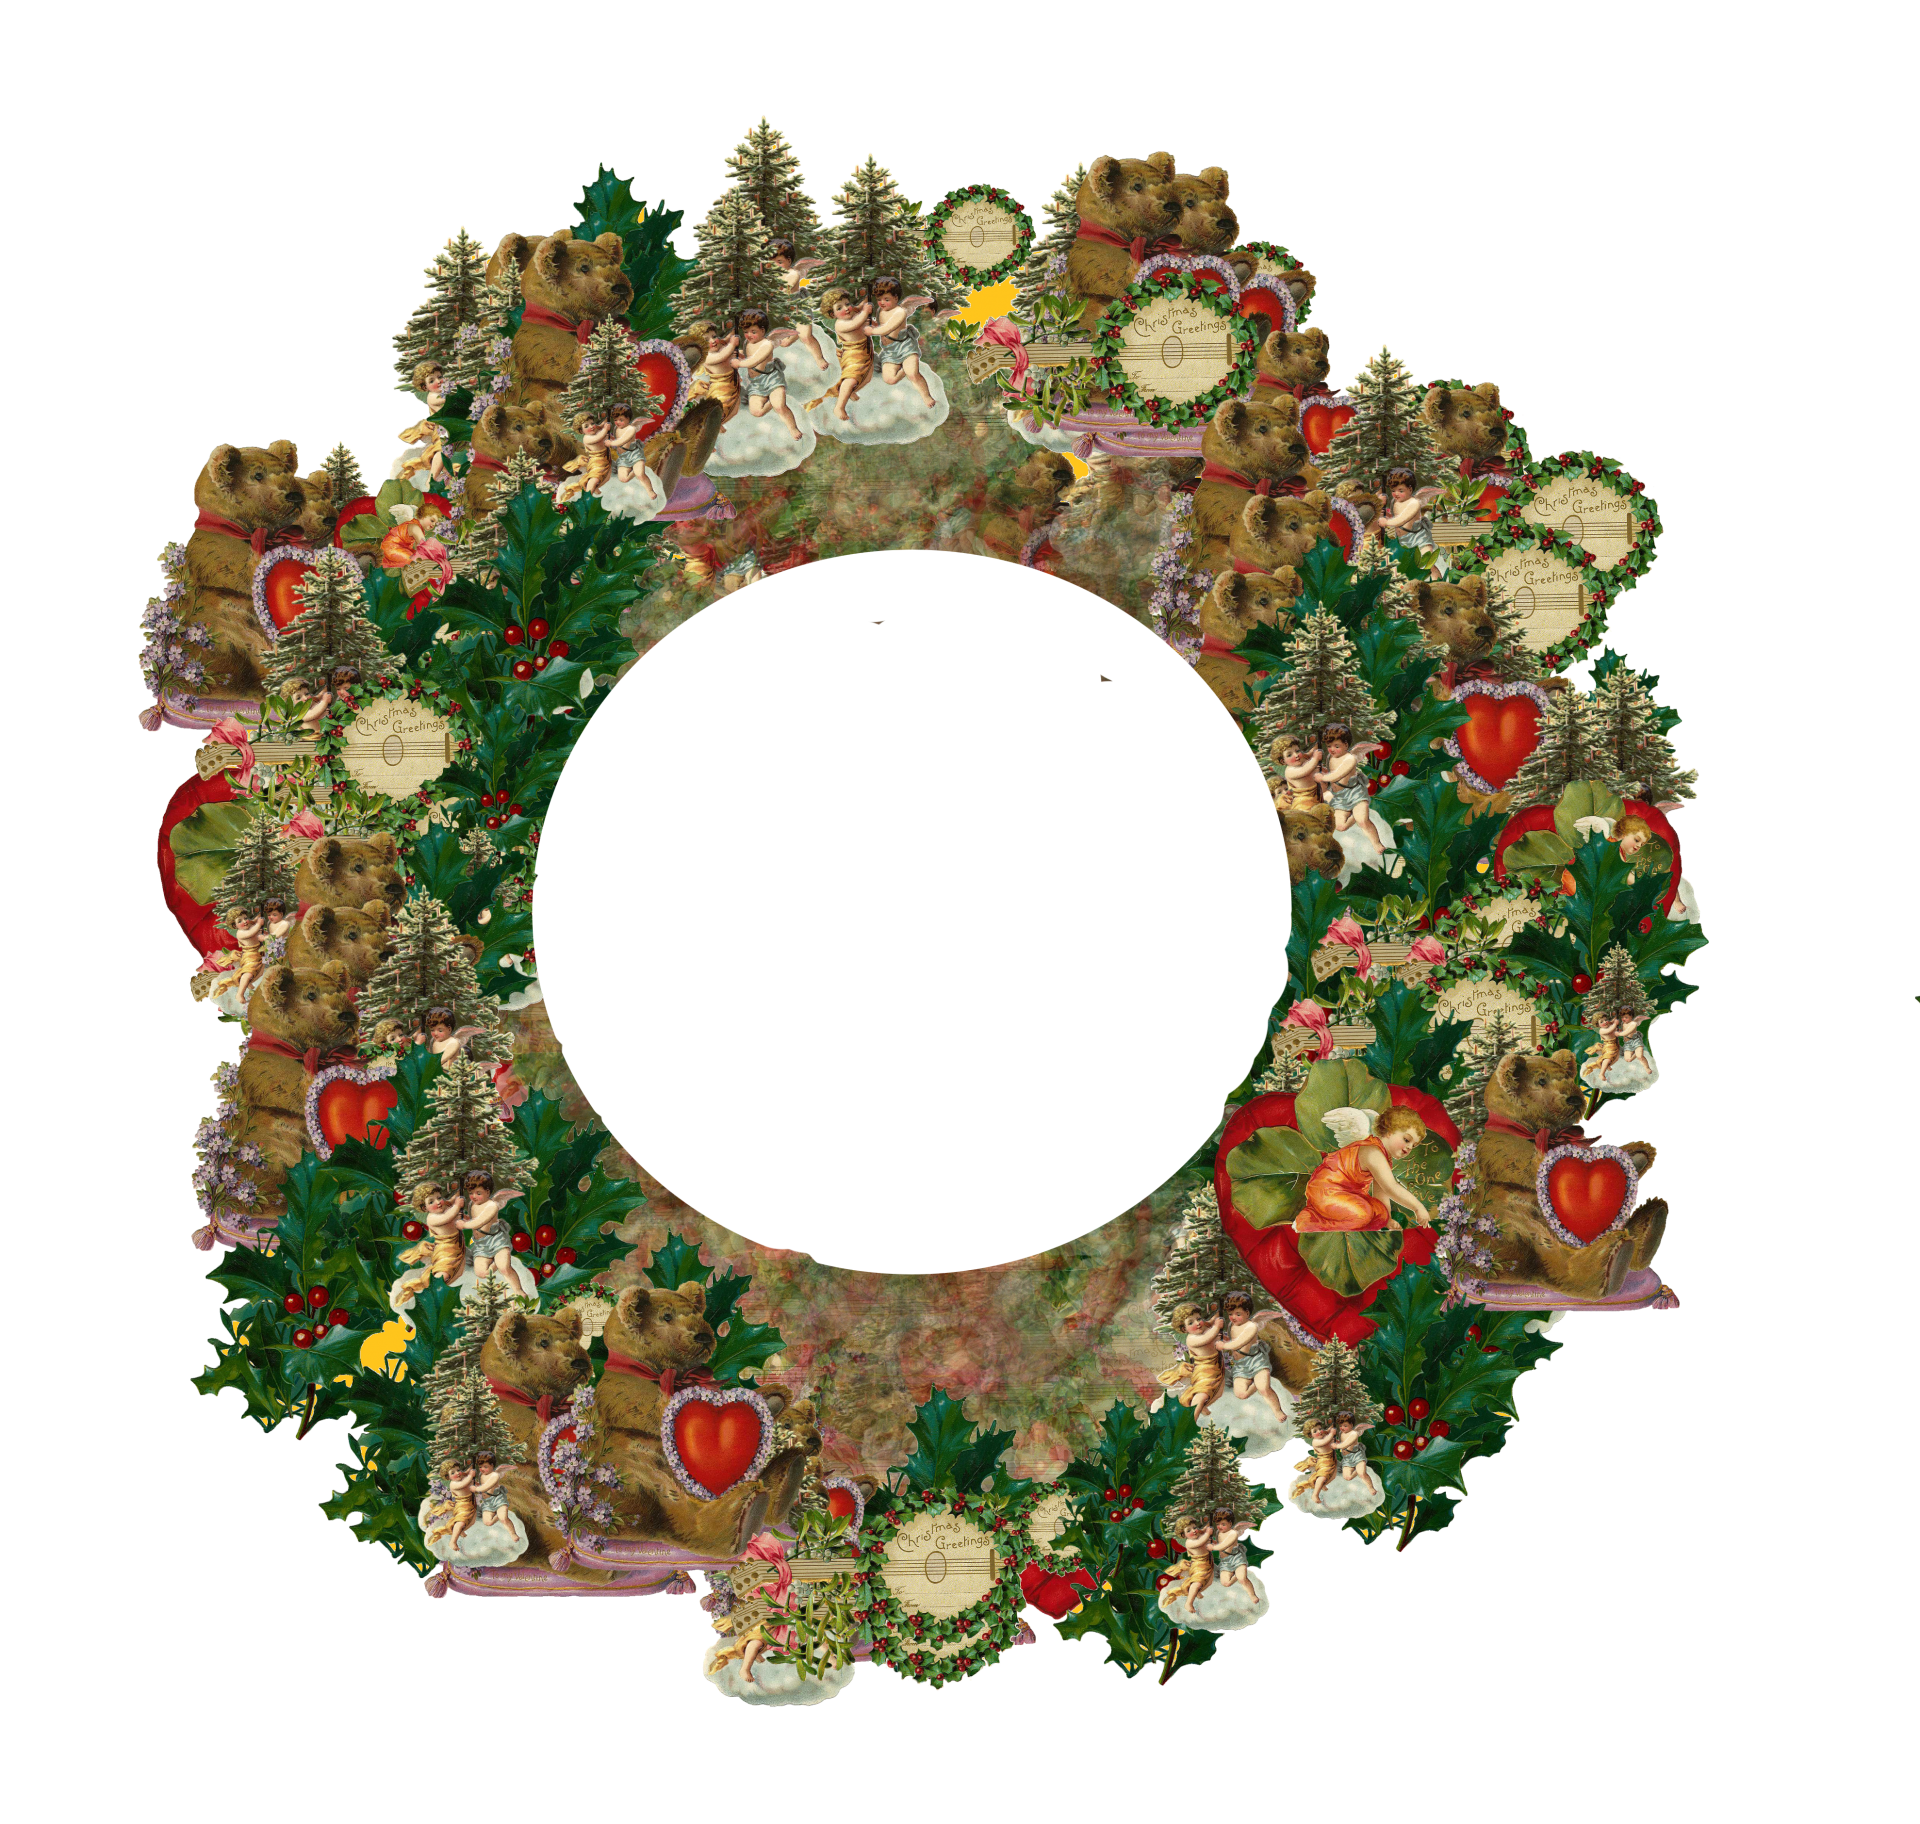 Vintage Christmas Wreath PNG Free Stock Photo - Public ...